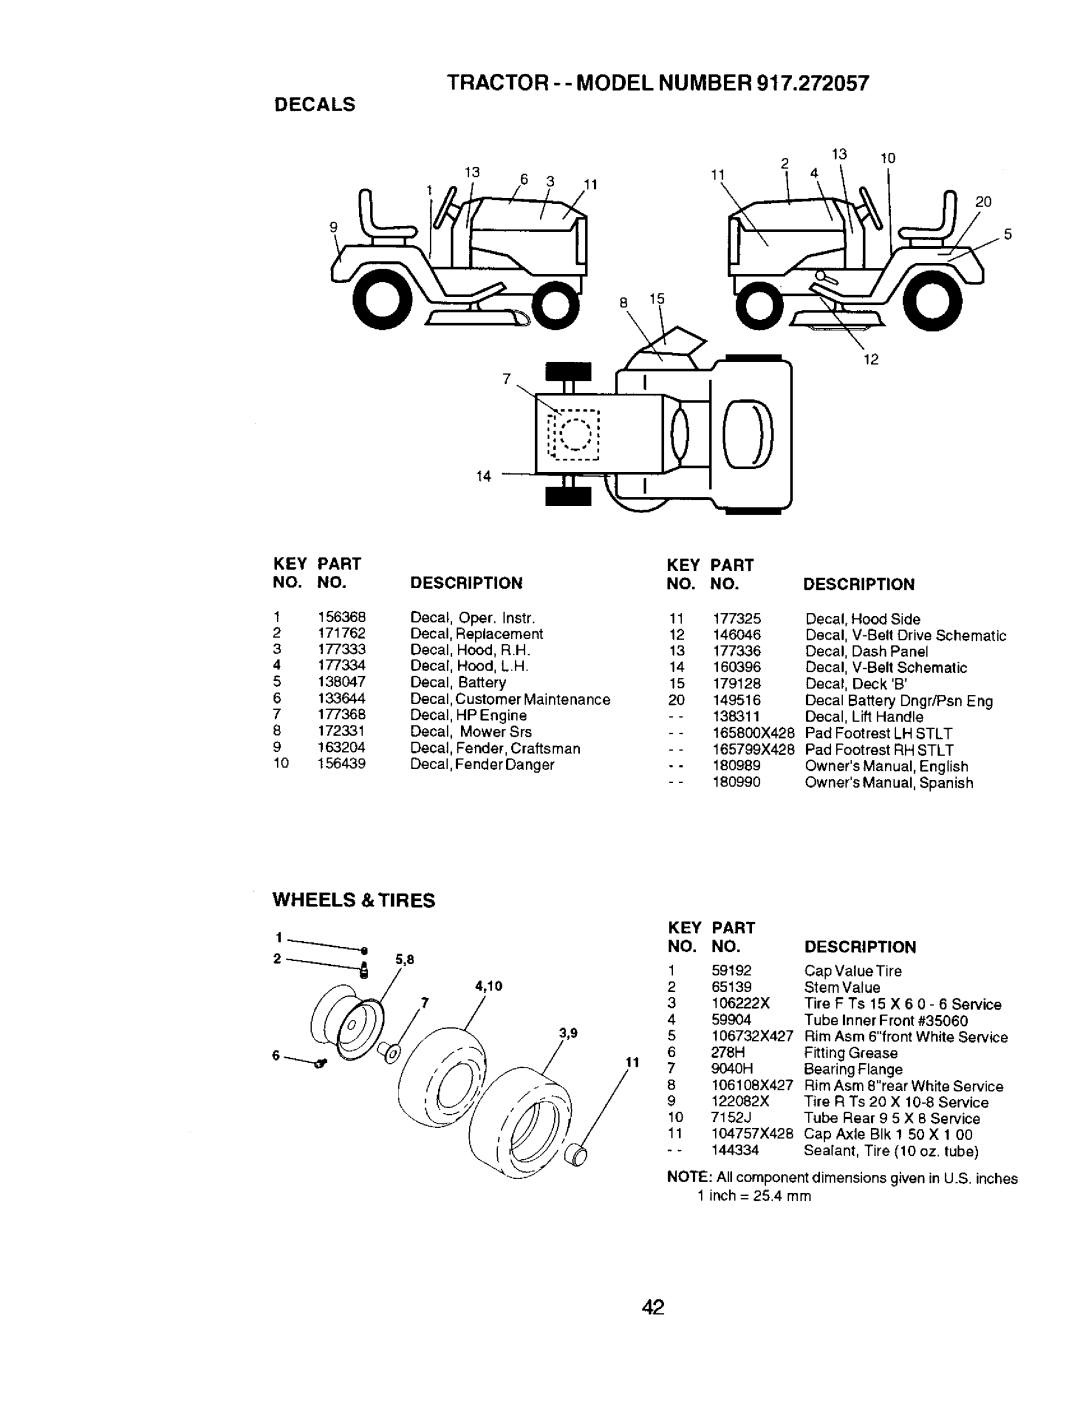 Craftsman 917.272057 owner manual Tractor --Model Number Decals, Wheels & Tires Key Part No. No. Description 